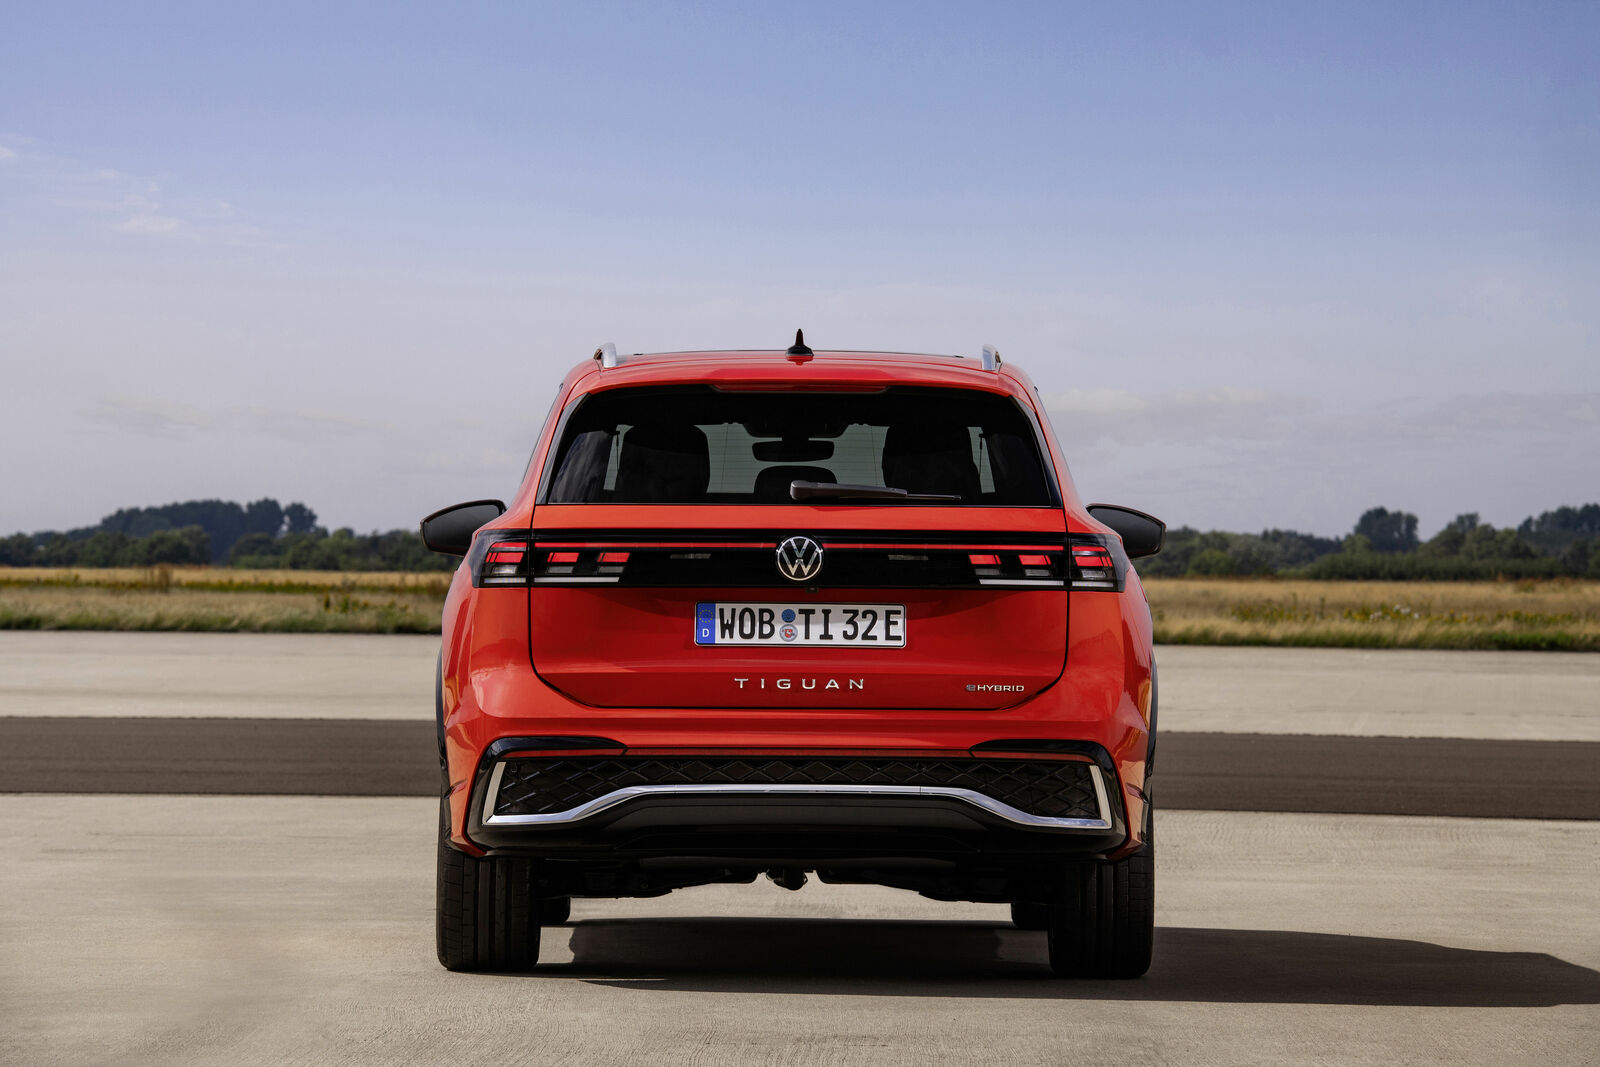 Volkswagen celebrates world premiere of the all-new Tiguan